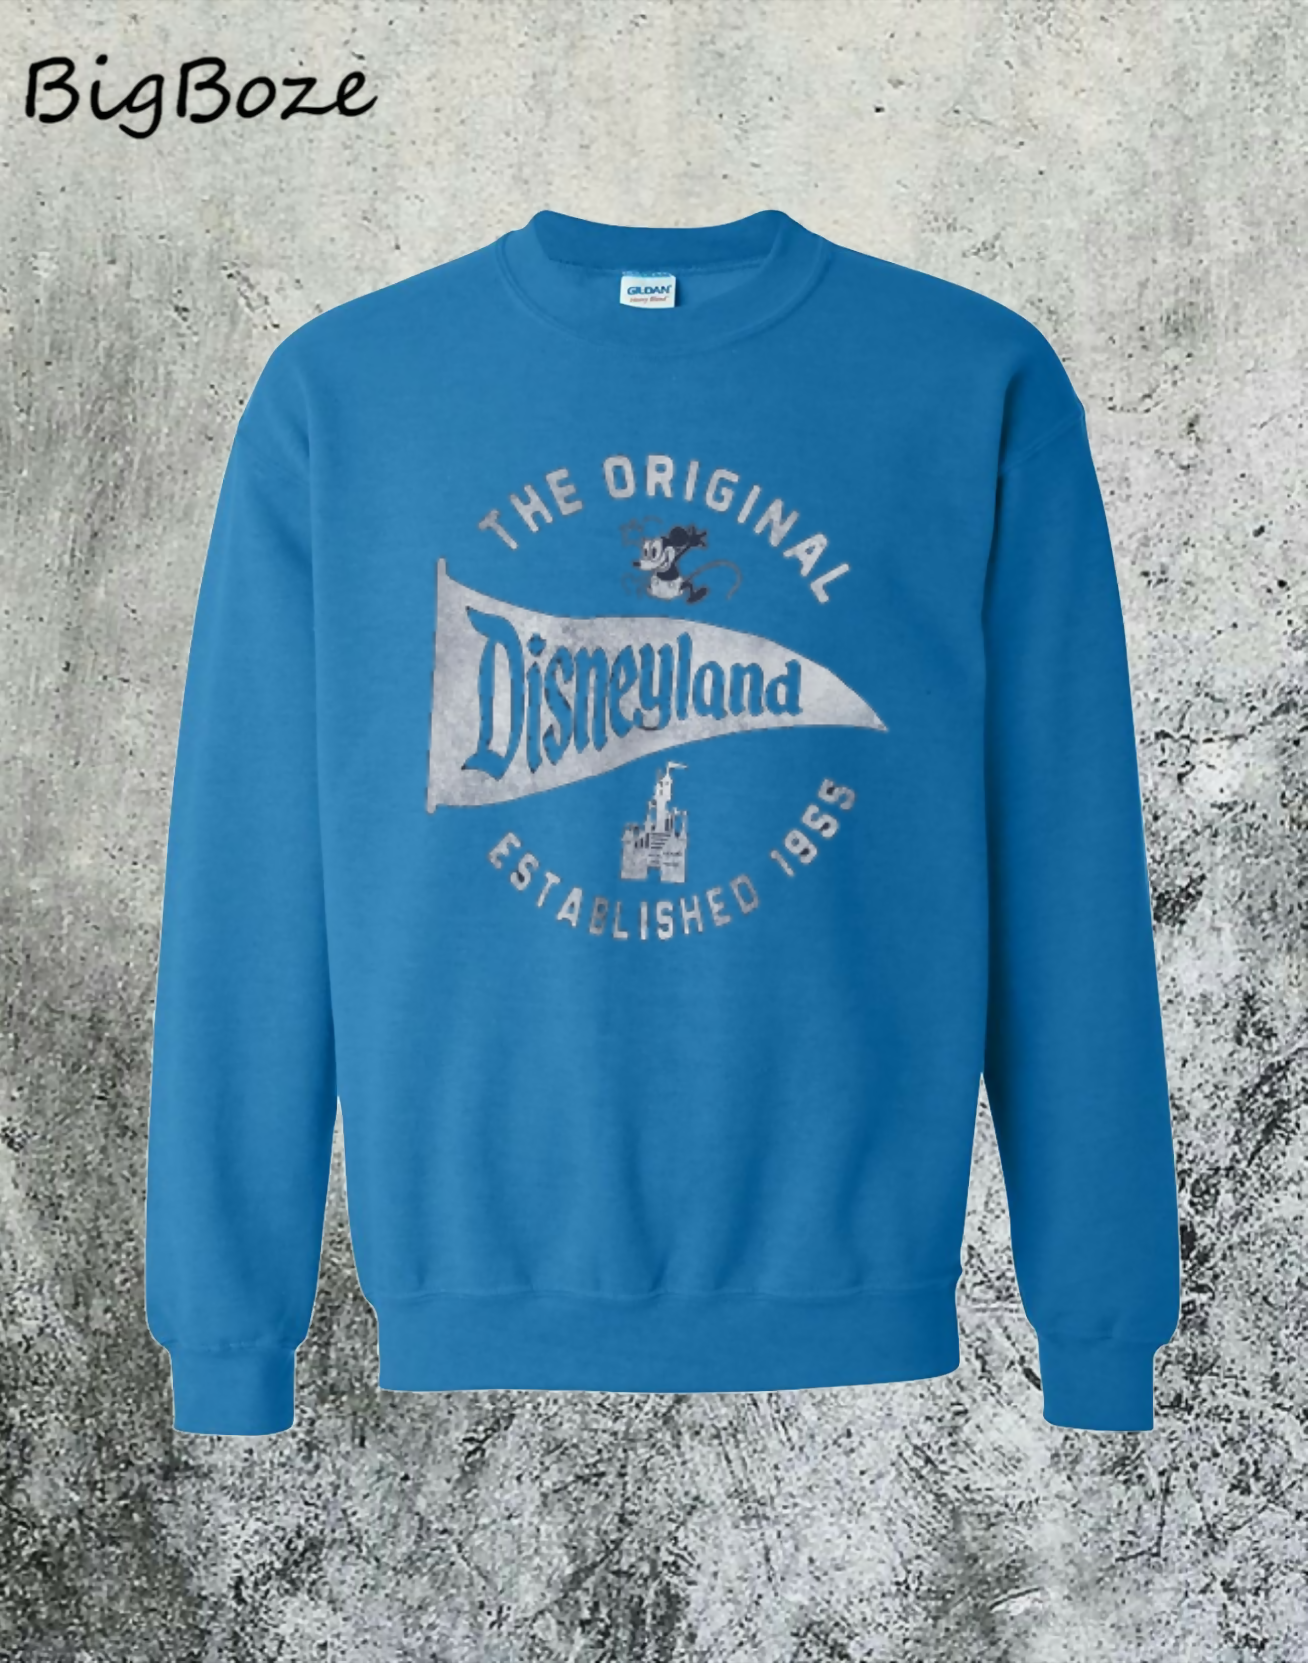 The Original Disneyland Sweatshirt